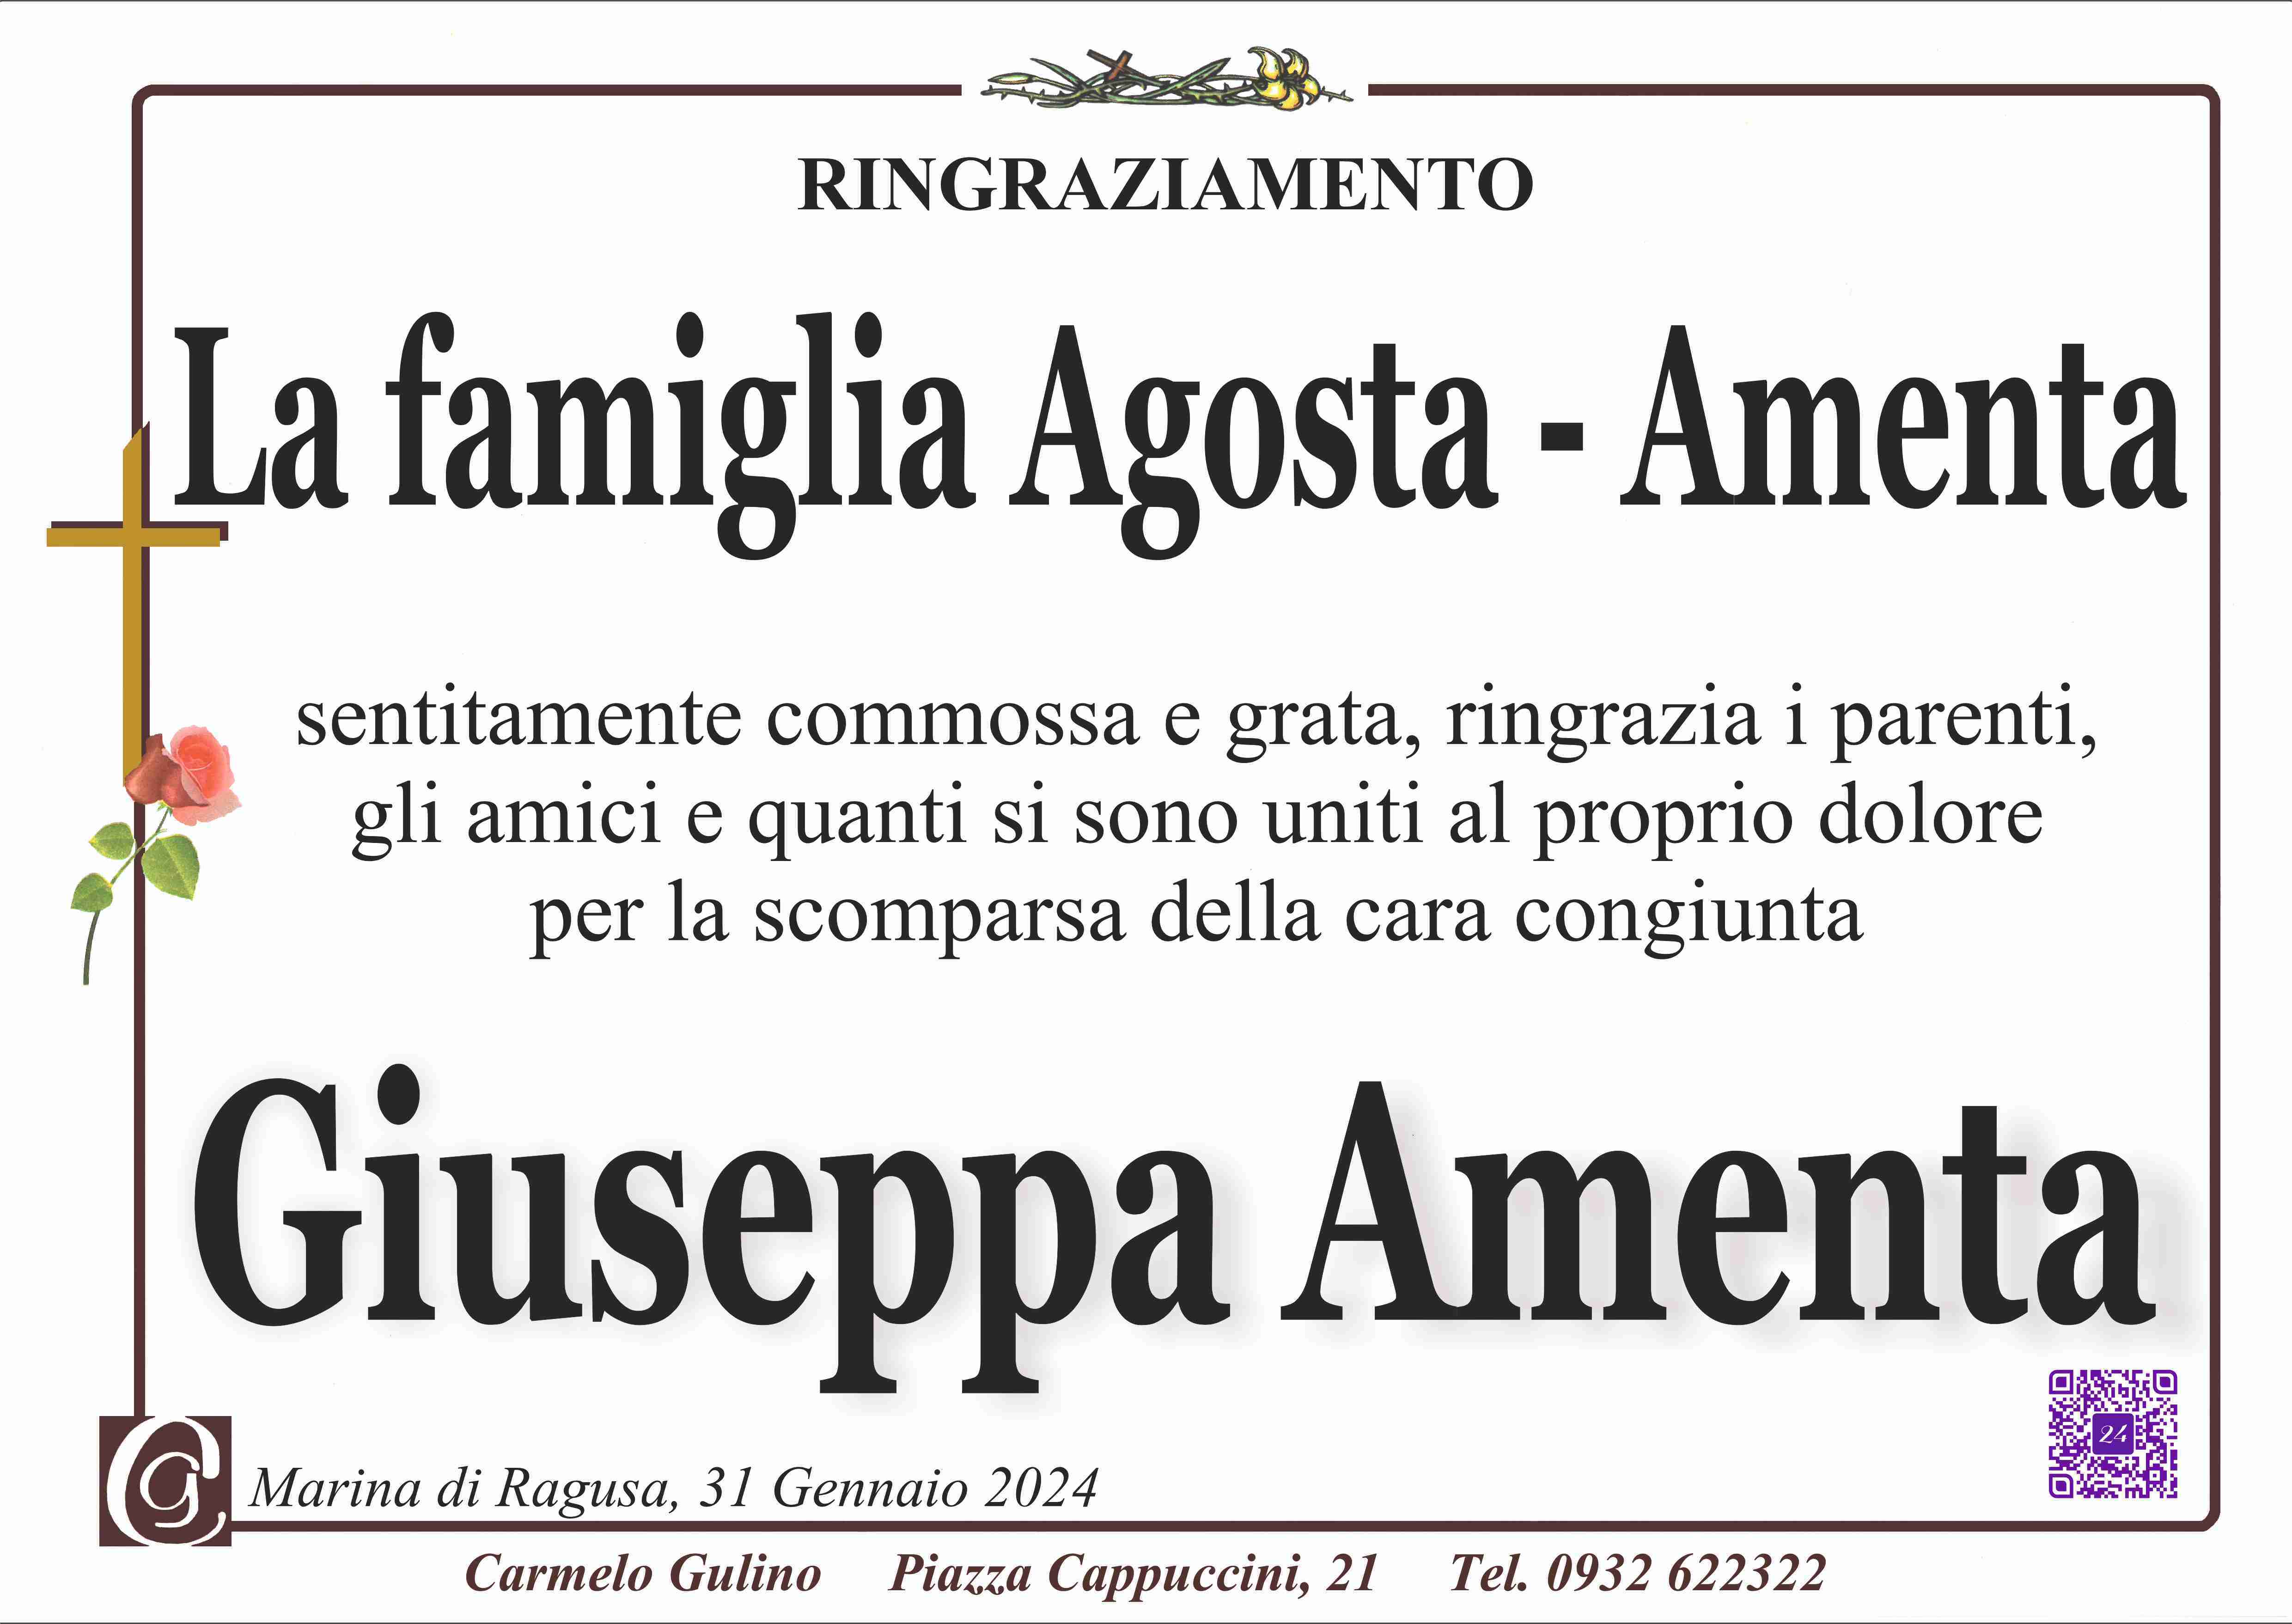 Giuseppa Amenta